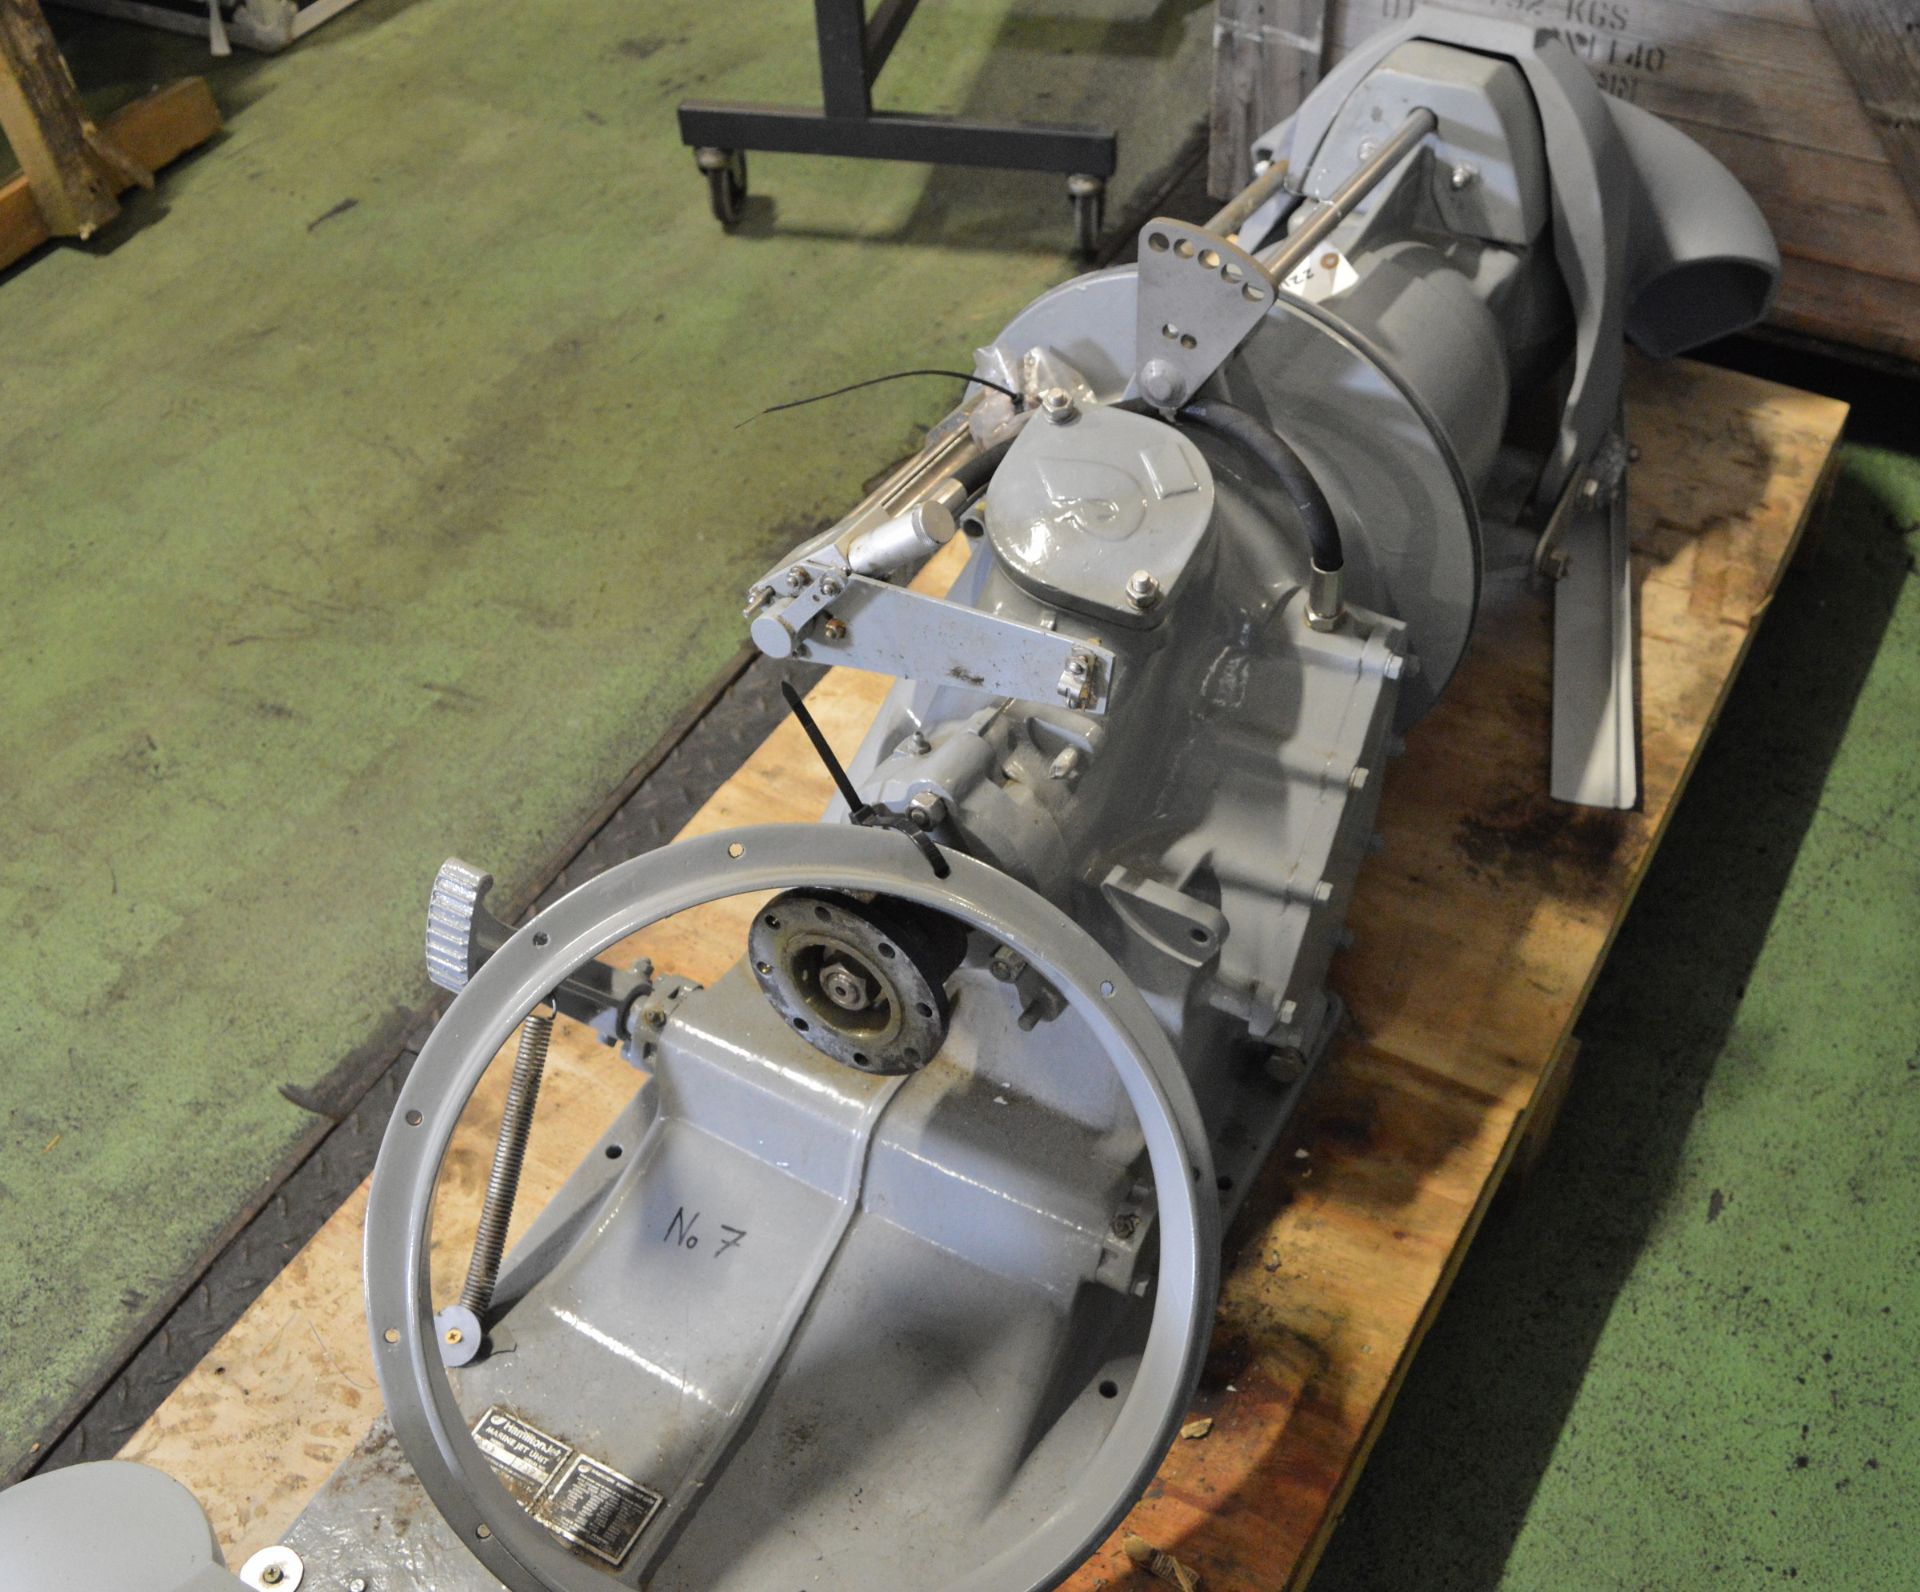 Hamilton 241 Marine Water Jet Engine - Very clean unit - Image 14 of 14